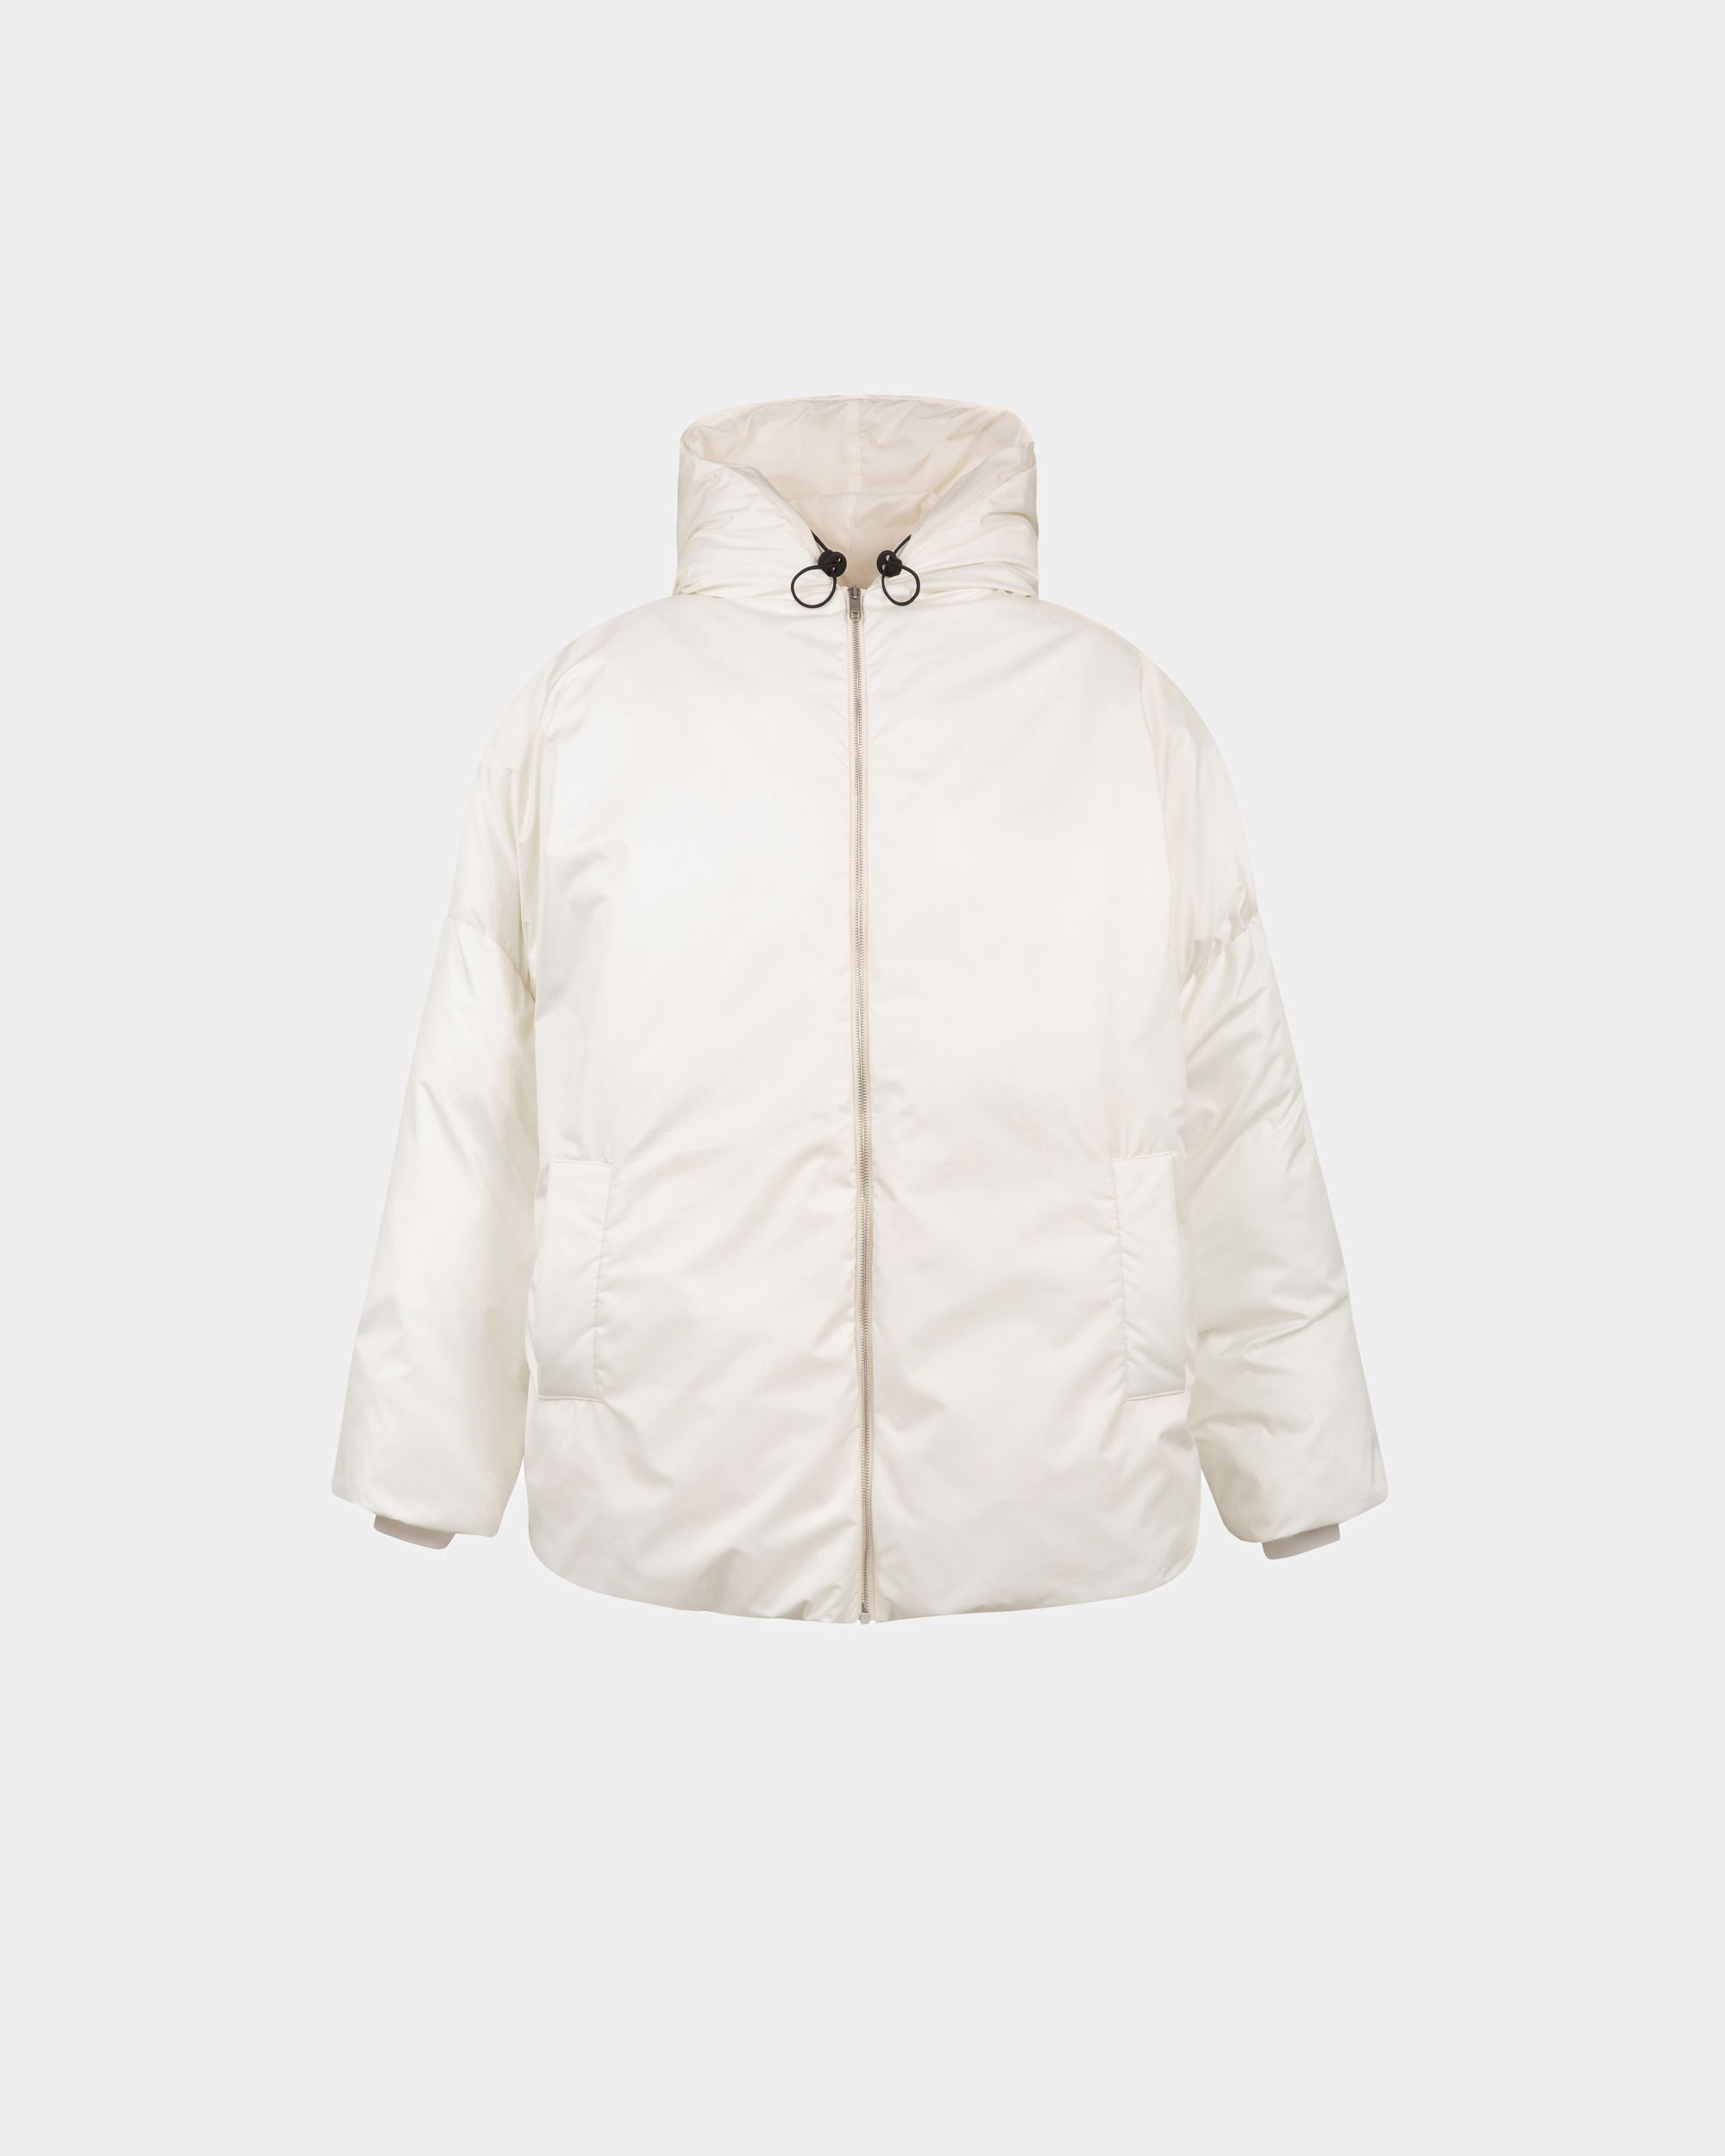 Women's Puffer Jacket in White Nylon | Bally | Still Life Front